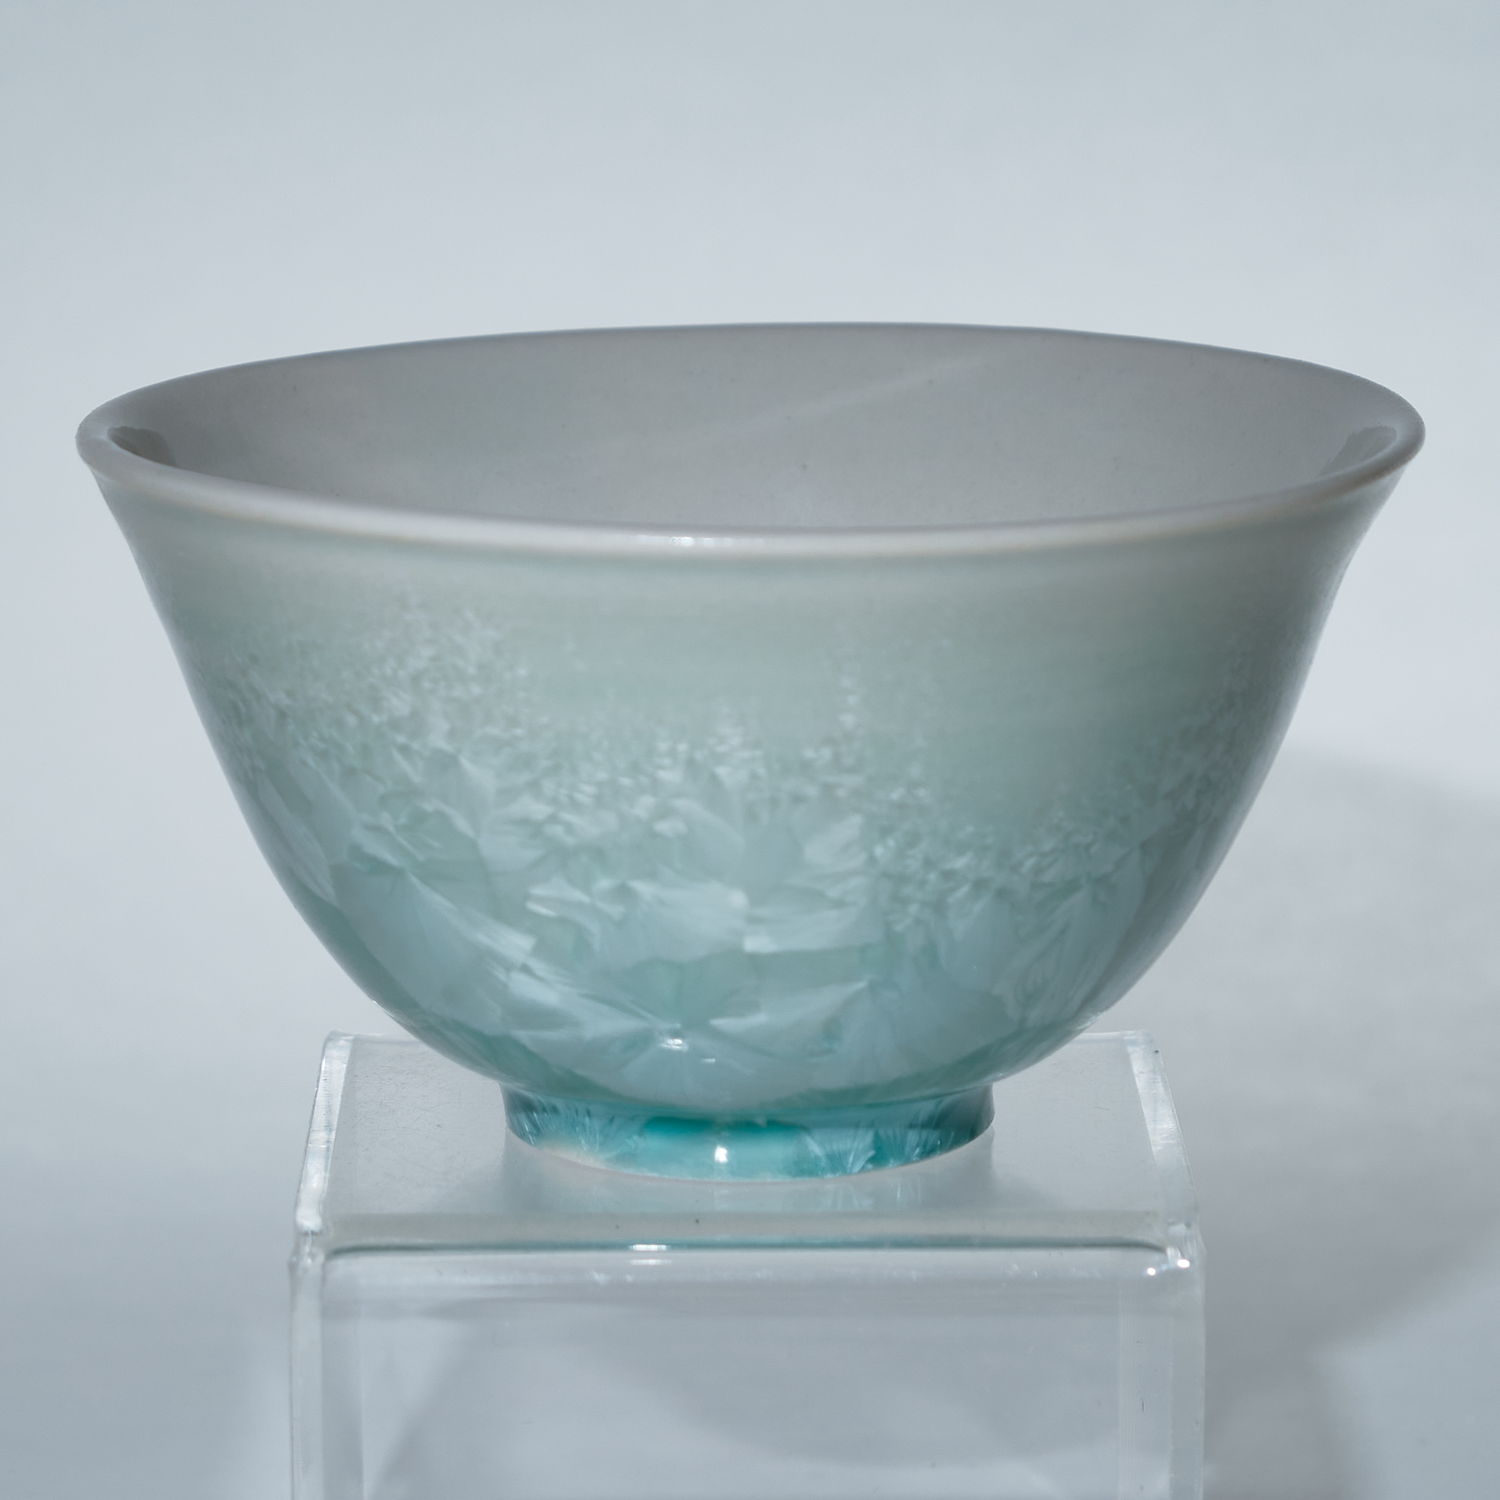 Yumiko Katsuya: Light Turquoise Chawan Product Image 1 of 1